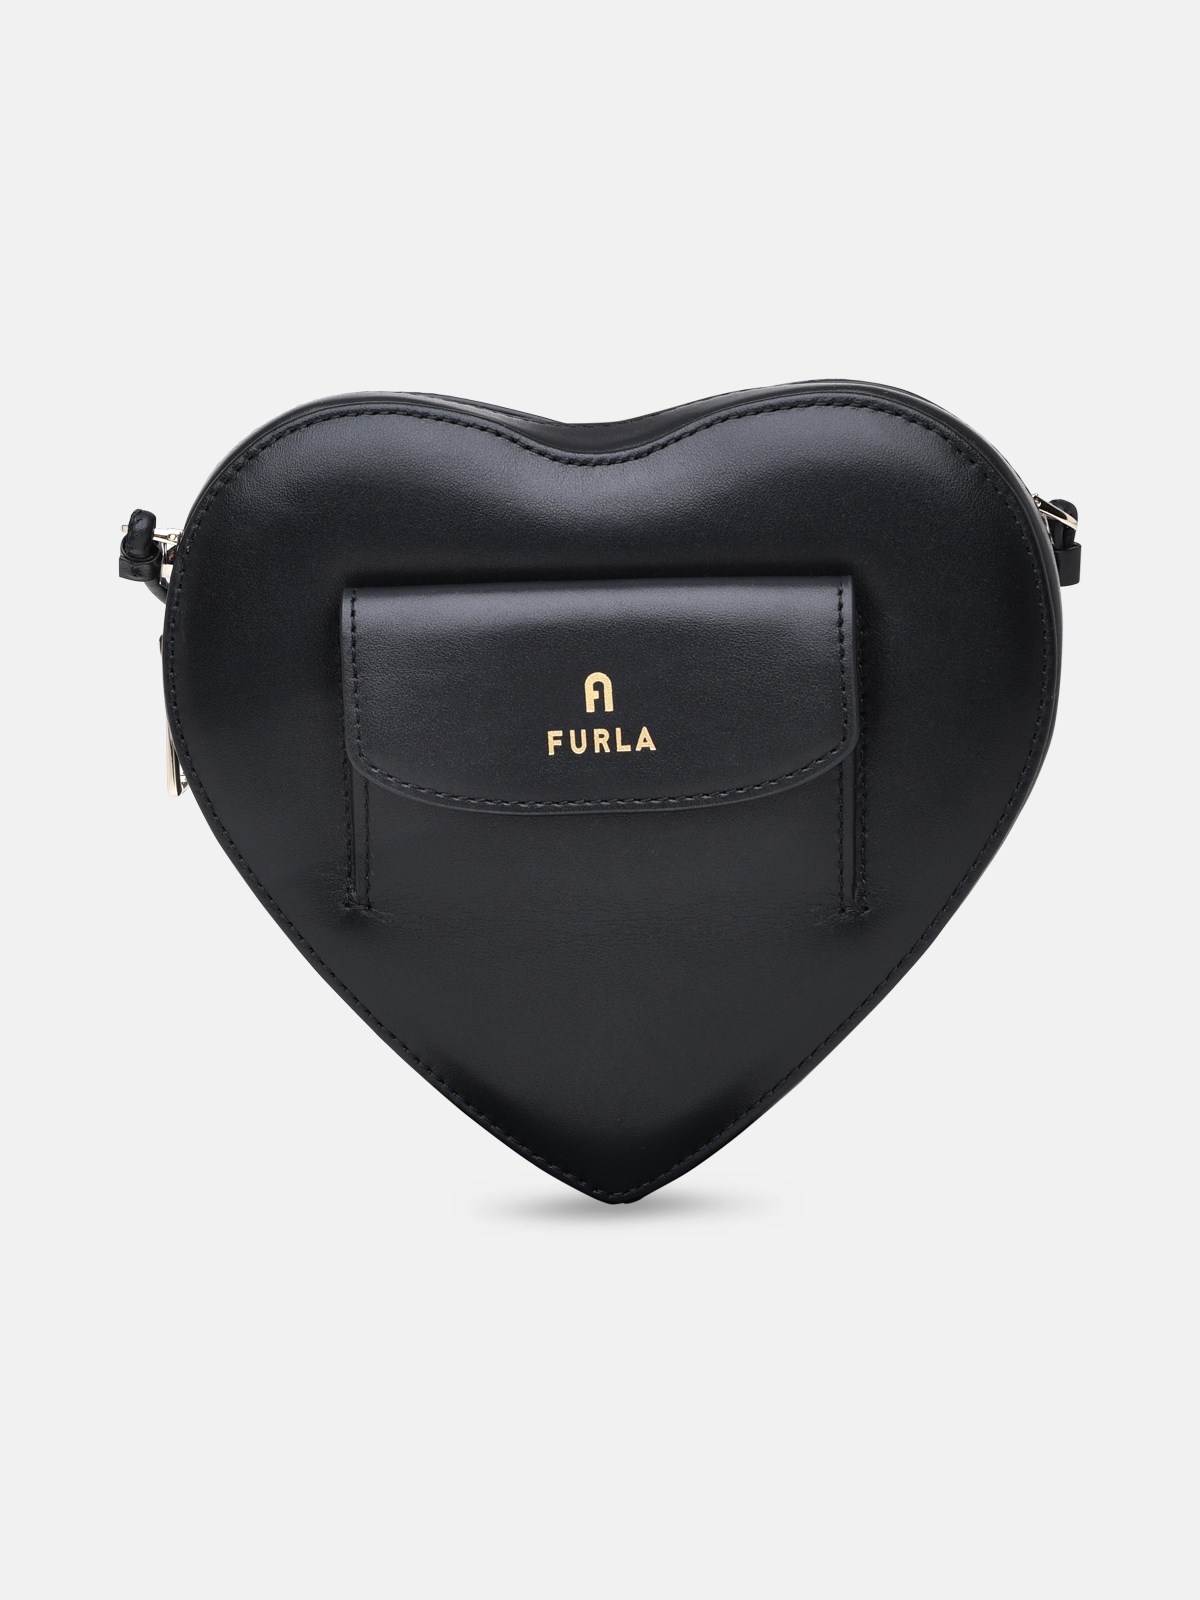 Furla Black Leather Bag